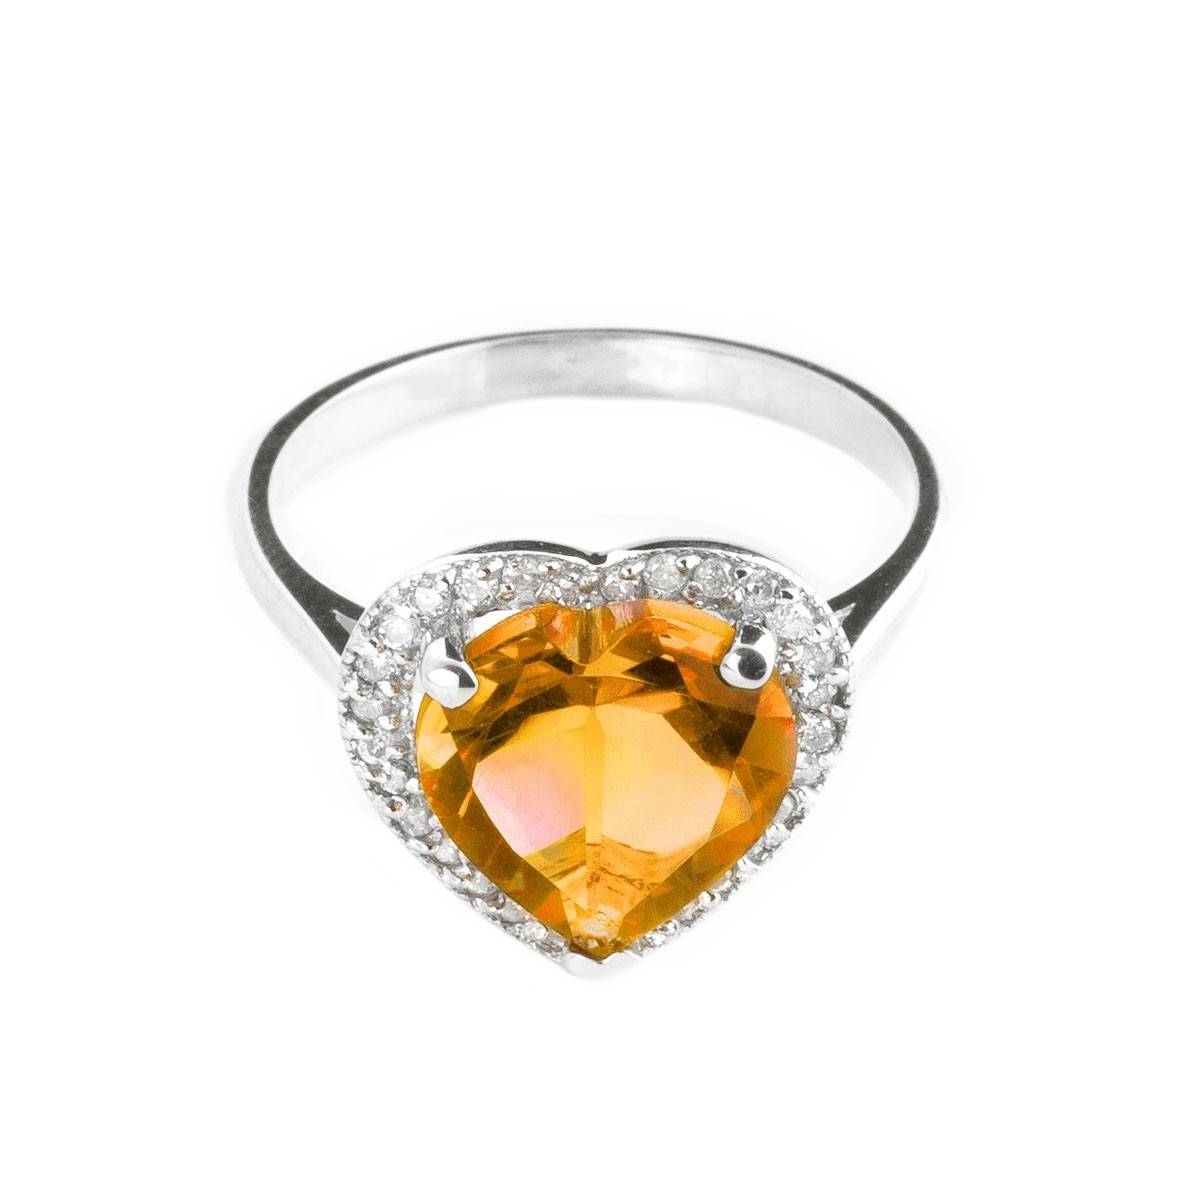 3.24 Carat 14K Solid White Gold Ring Diamond Heart Citrine